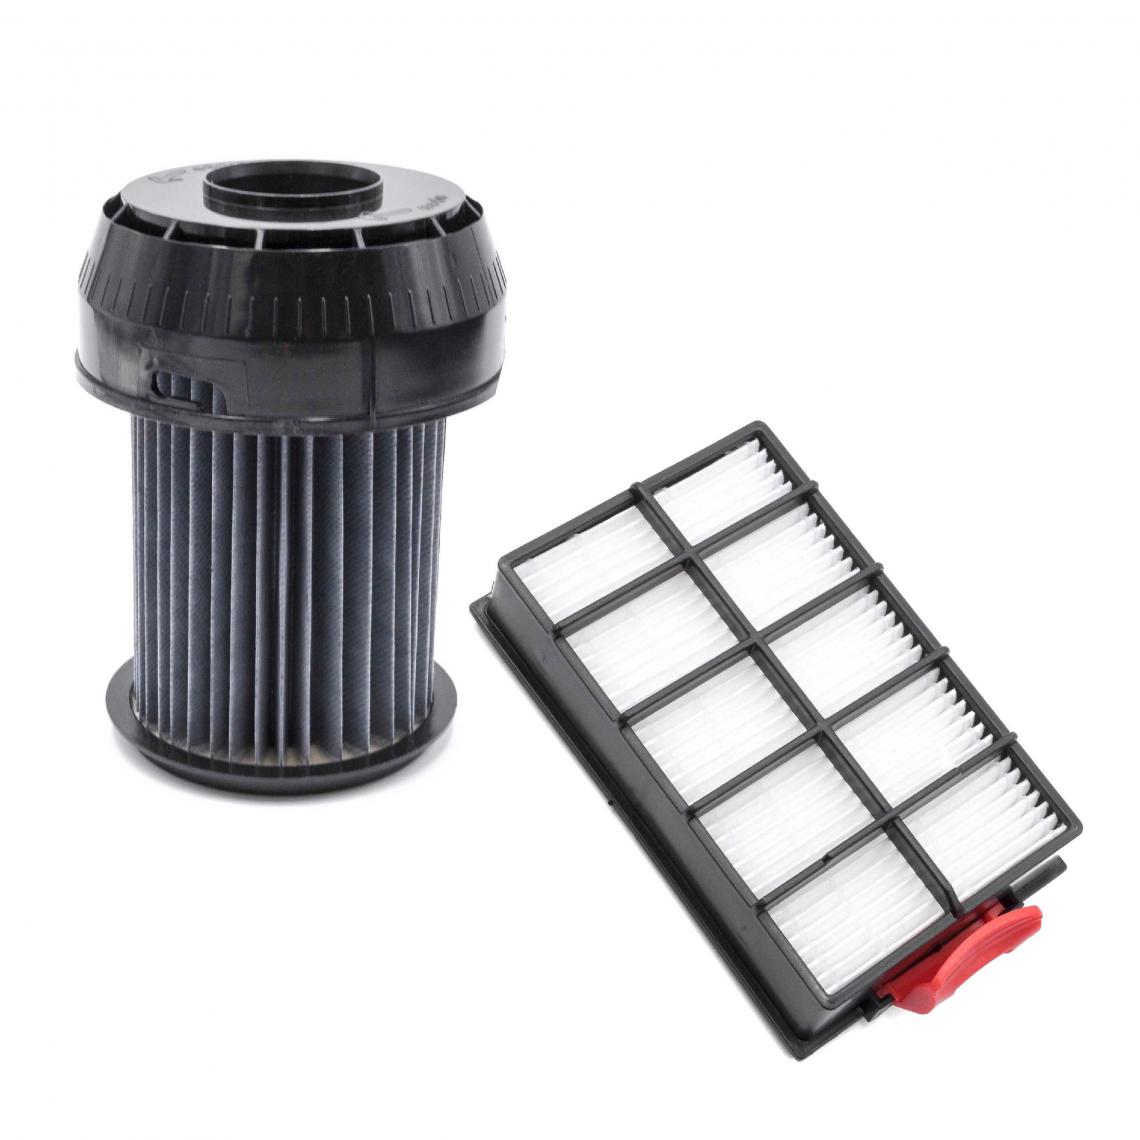 Vhbw - vhbw Lot de filtres compatible avec Bosch BGS 6235, 6235 GB/01, 62530, 6253002, 62531 aspirateur - 2x Filtres de rechange - Accessoire entretien des sols